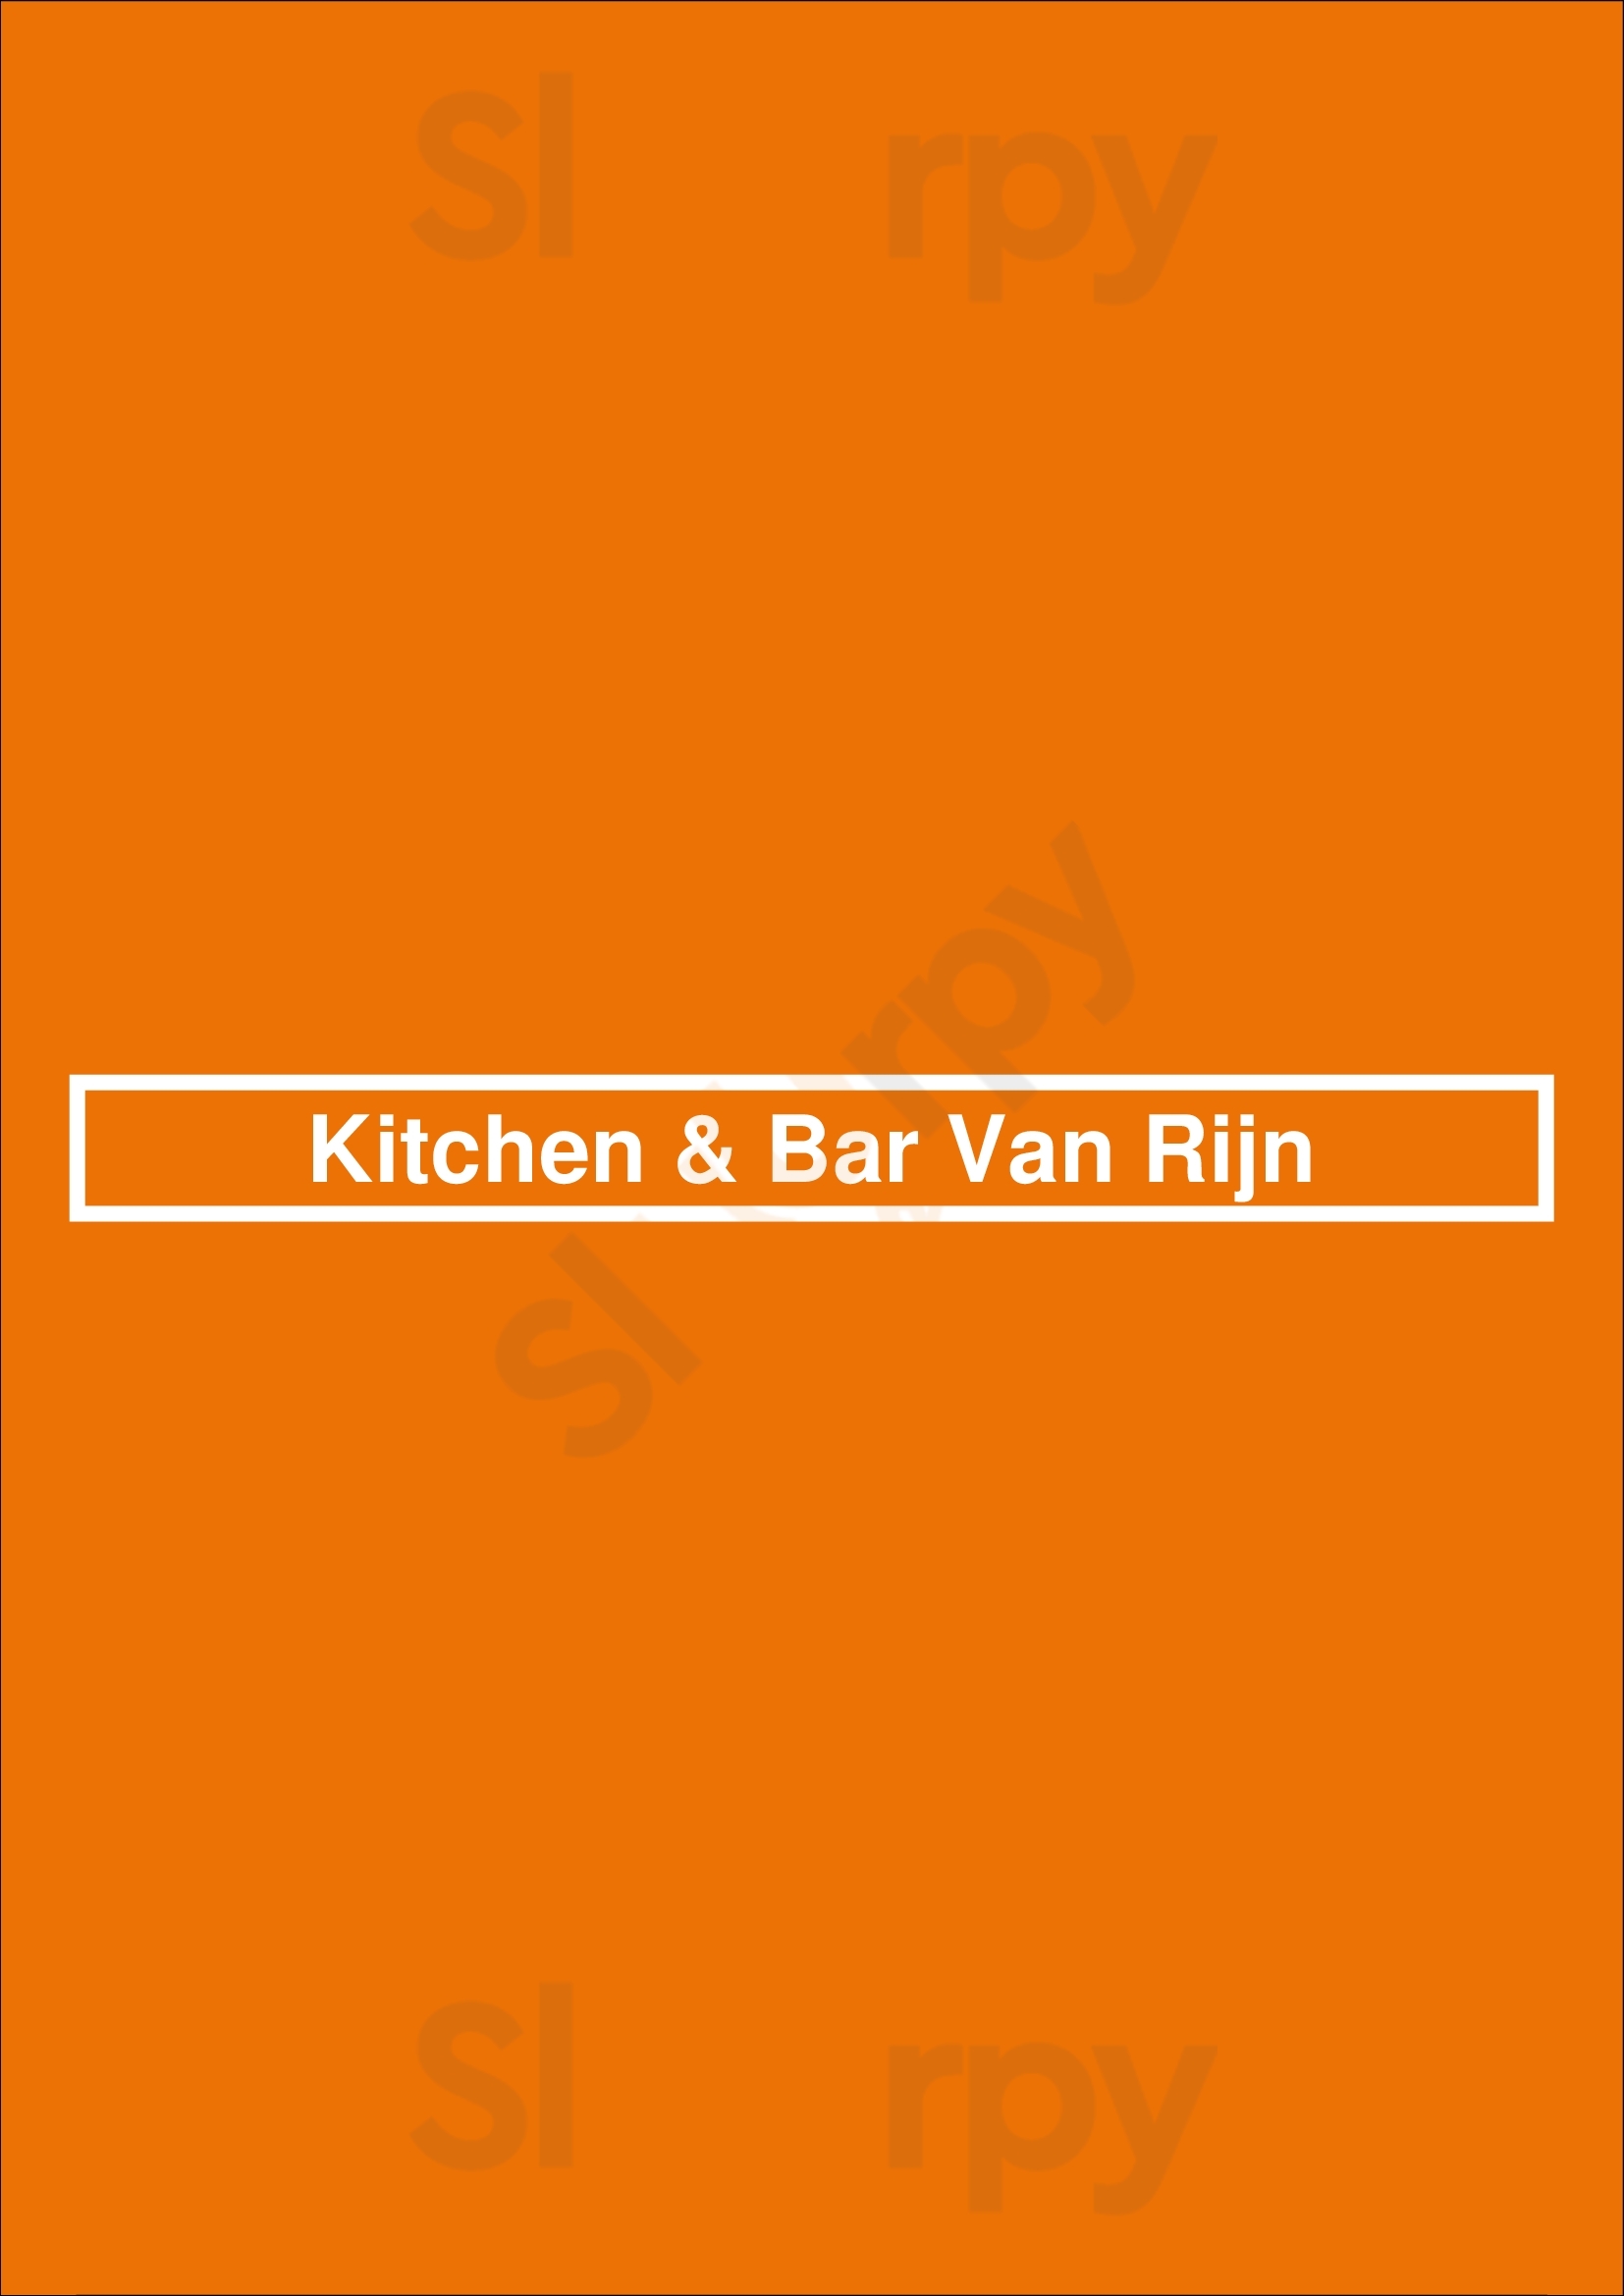 Kitchen & Bar Van Rijn Amsterdam Menu - 1